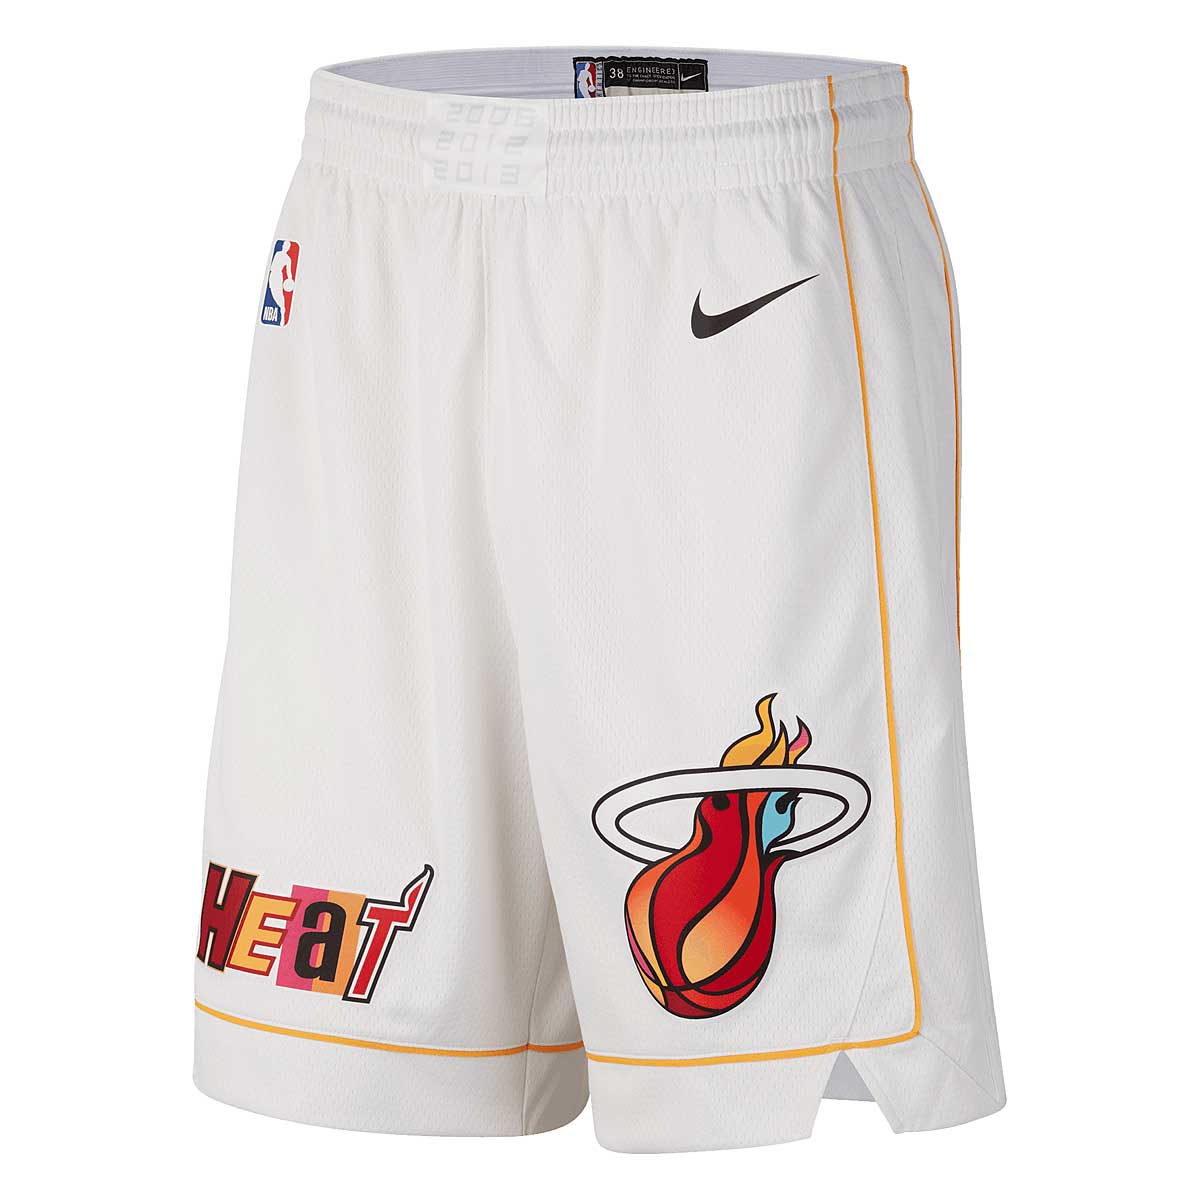 Nike NBA Miami Heat Dri-Fit City Edition Swingman Shorts, White/Black